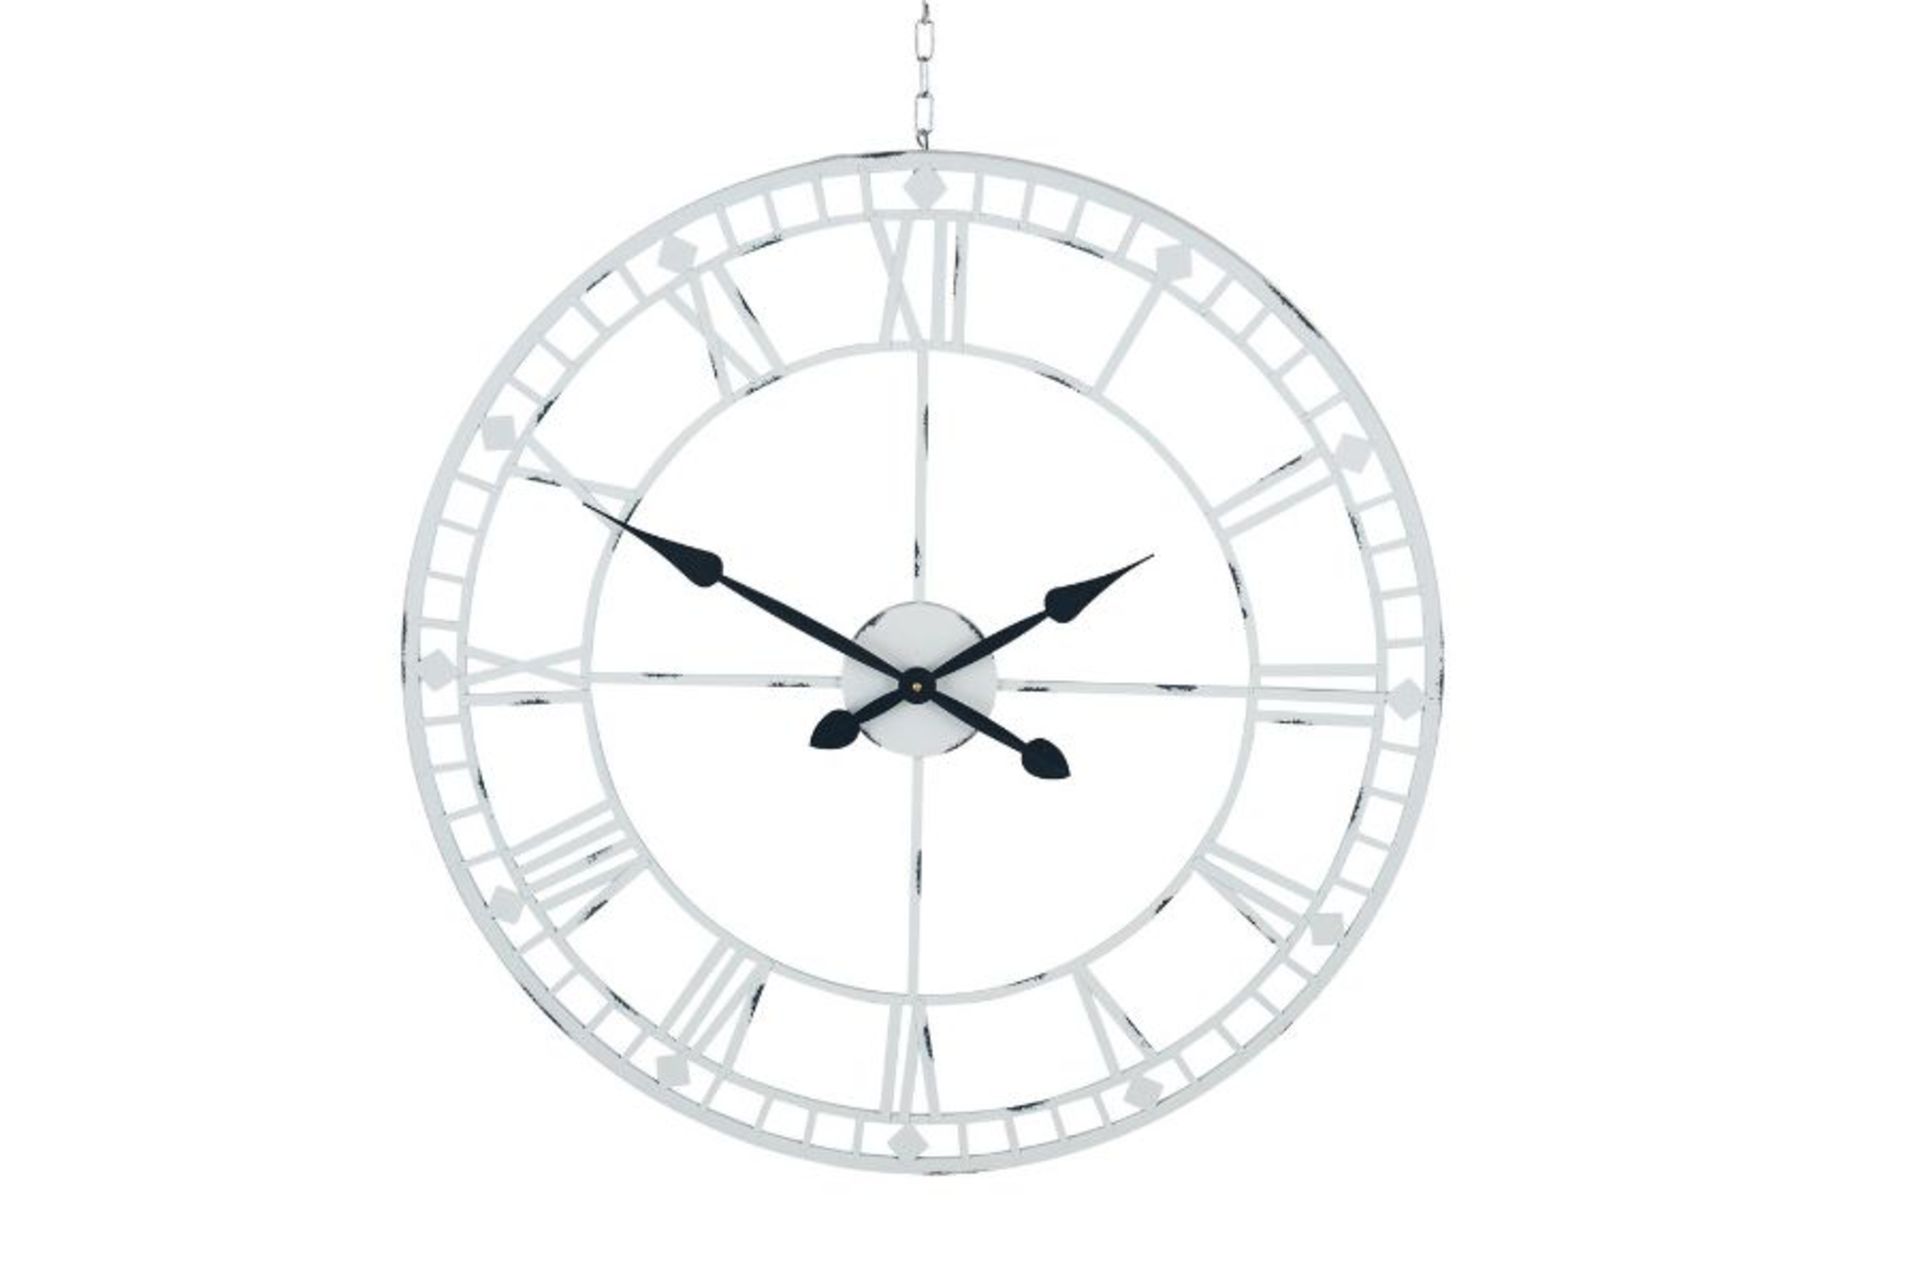 Fernleaf, Fareham Oversized Metal Round 80cm Wall Clock (SILVER) - RRP £129.99 (PACH7817 - 26161/7)